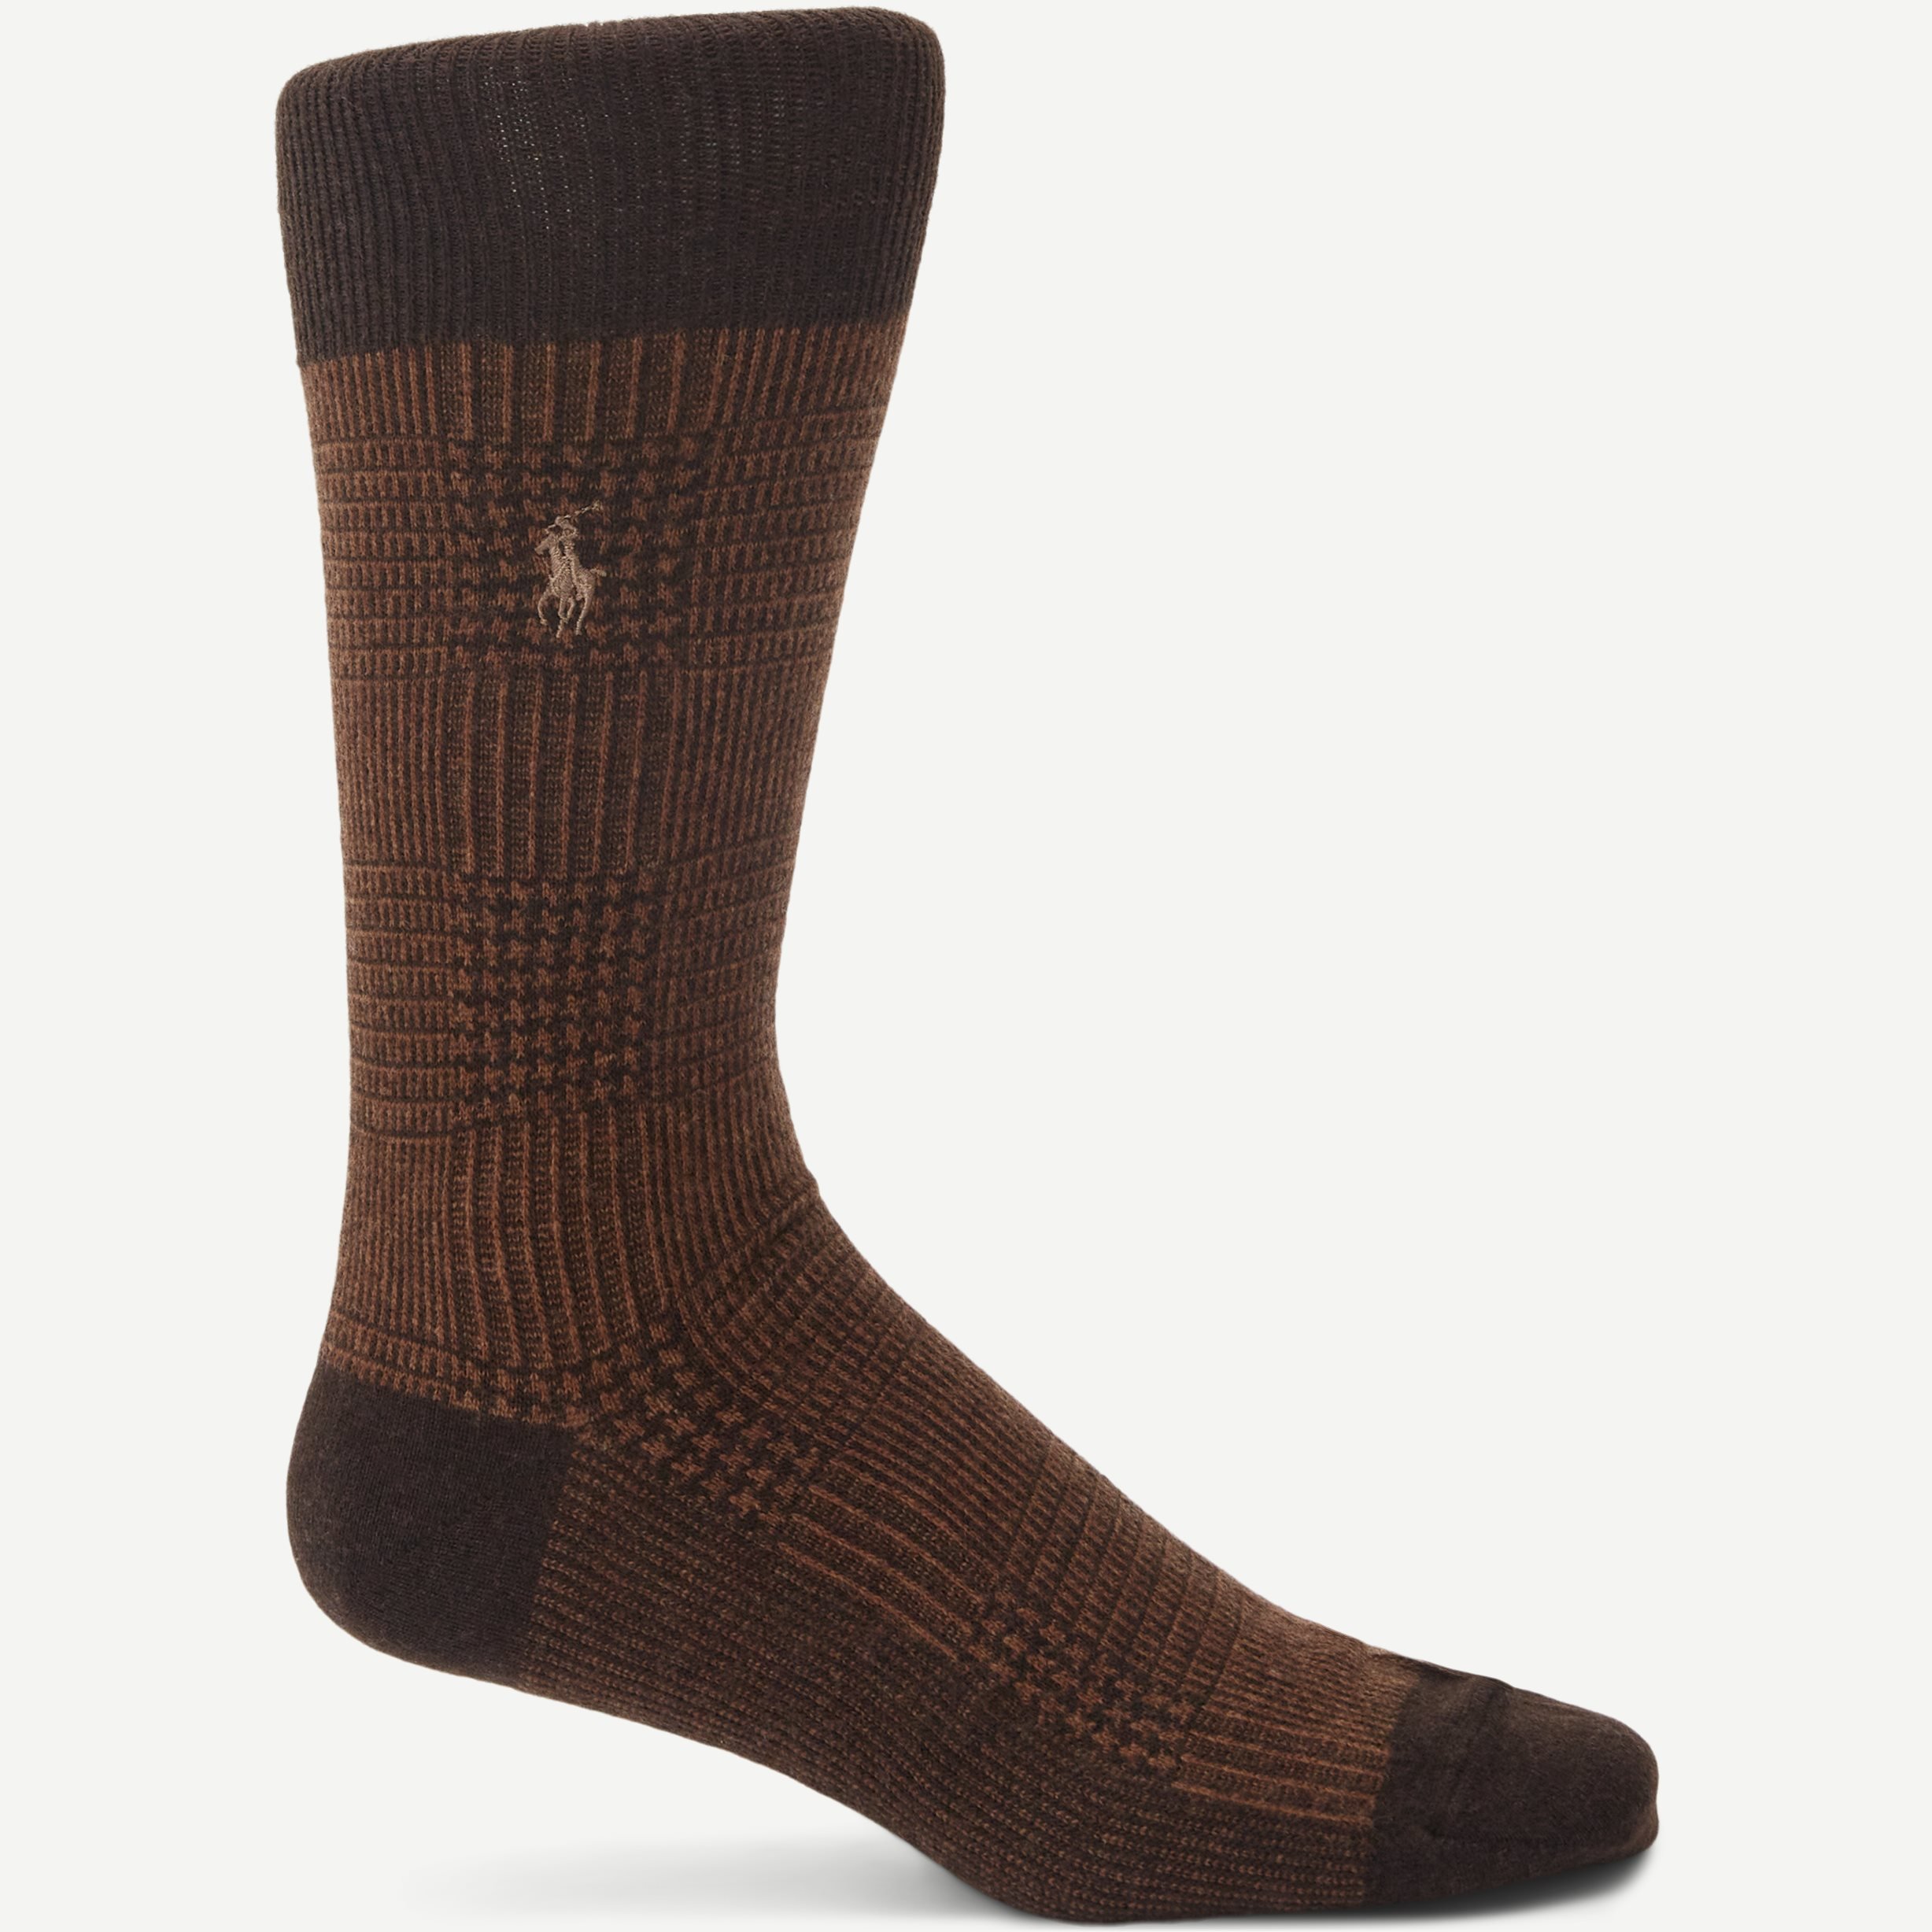 Ralph Lauren sokker - Strømper - Regular fit - Brun